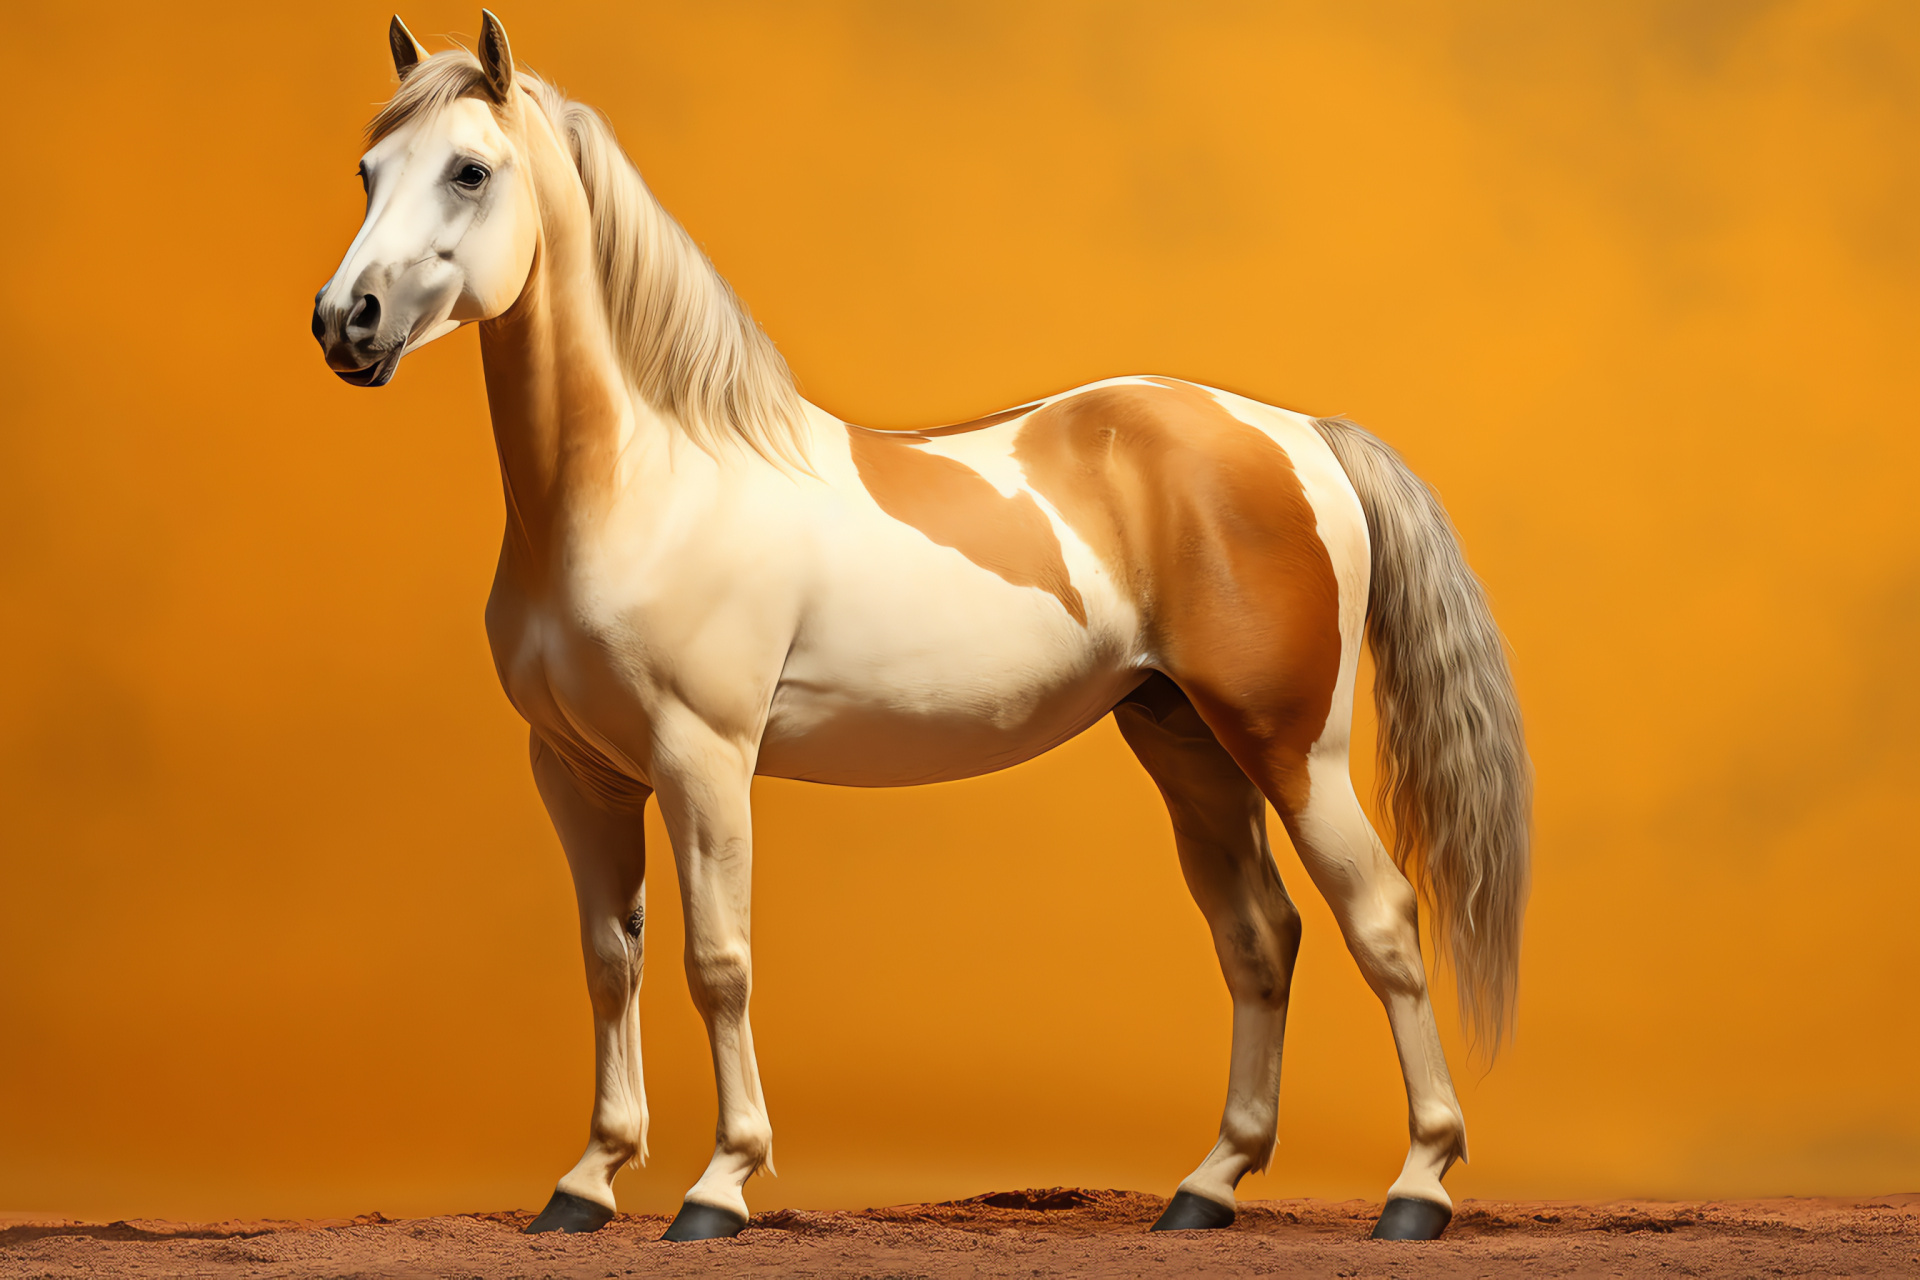 Horse profile, Sunlit mane, Equine strength, Galloping steed, Outdoor setting, HD Desktop Wallpaper